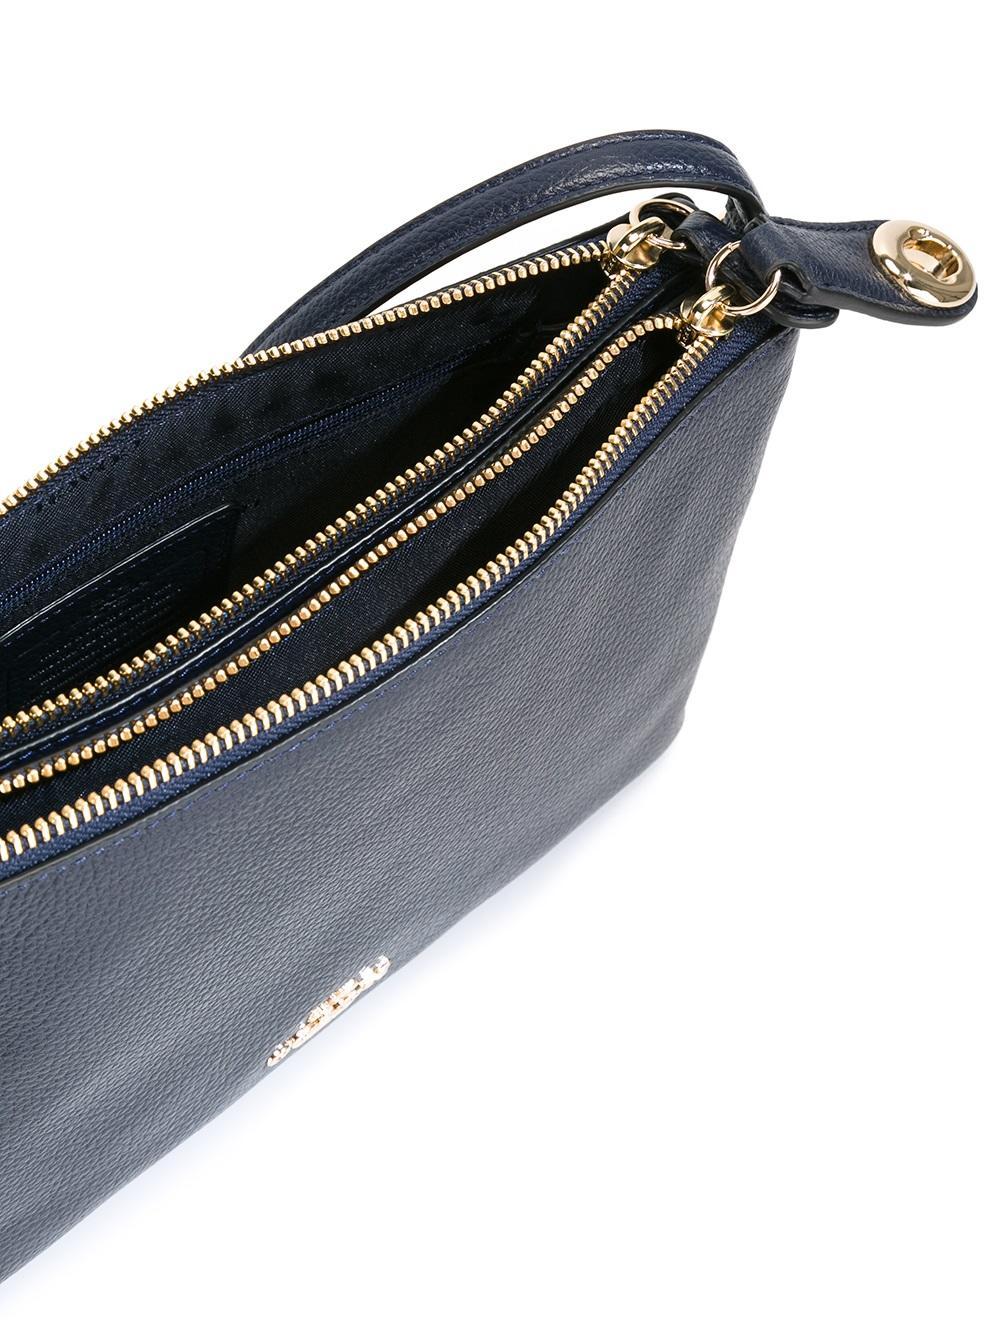 COACH Leather Adjustable Strap Crossbody Bag in Blue - Lyst